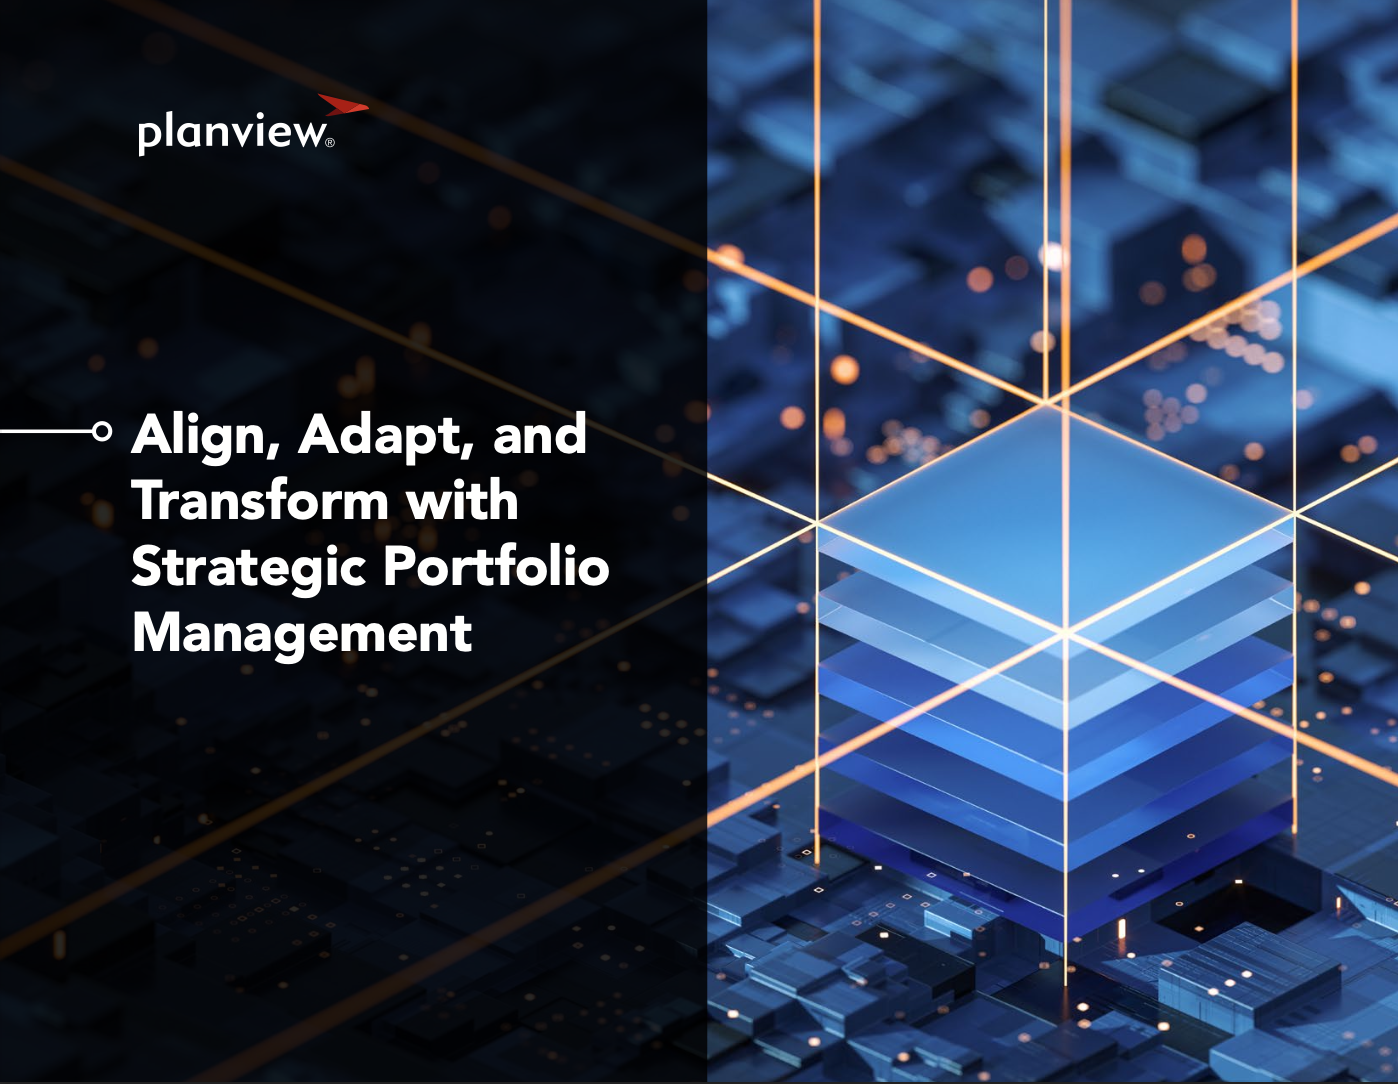 Align, Adapt, and Transform with Strategic Portfolio Management